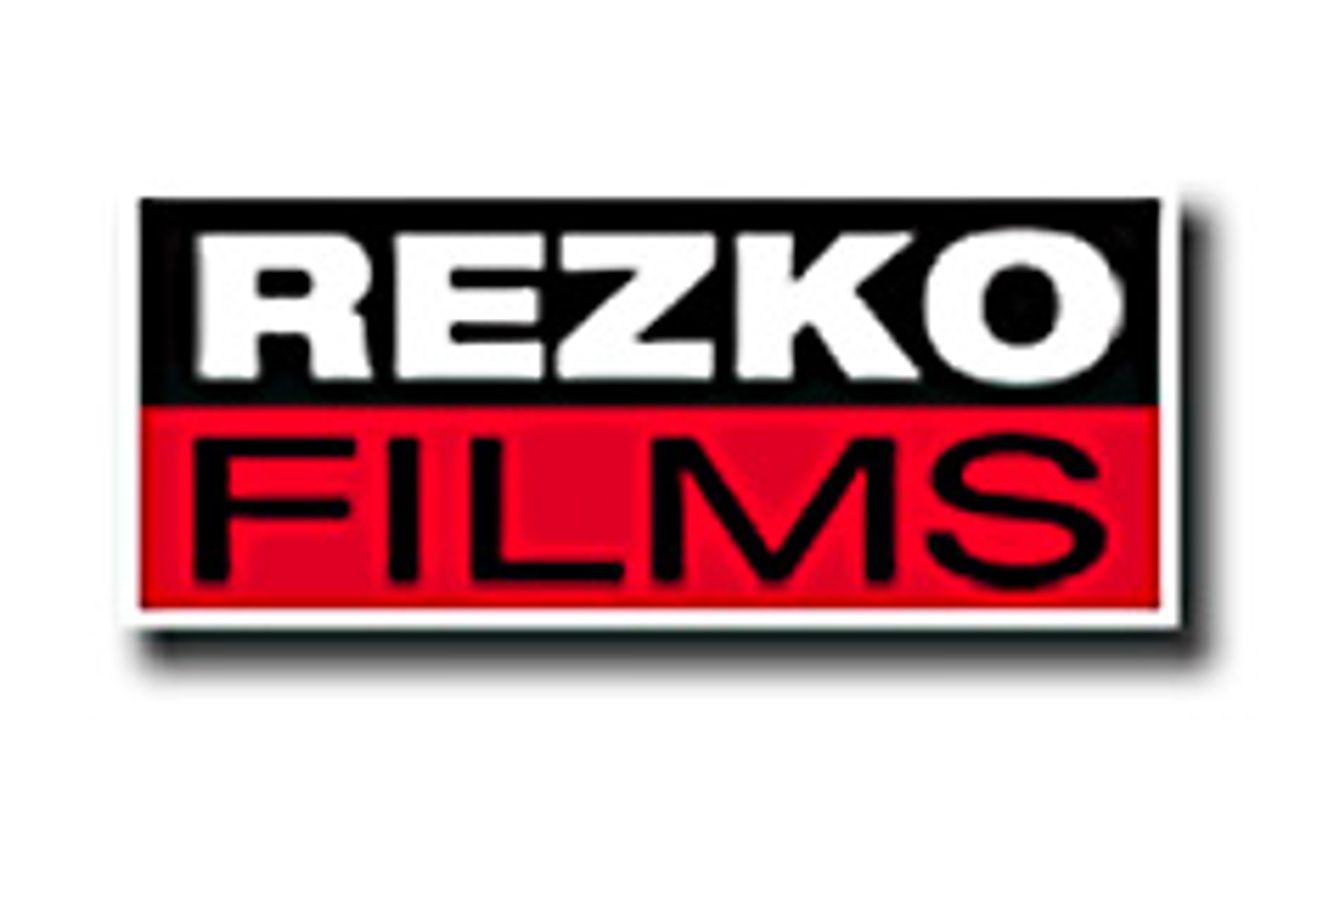 Rezko Films